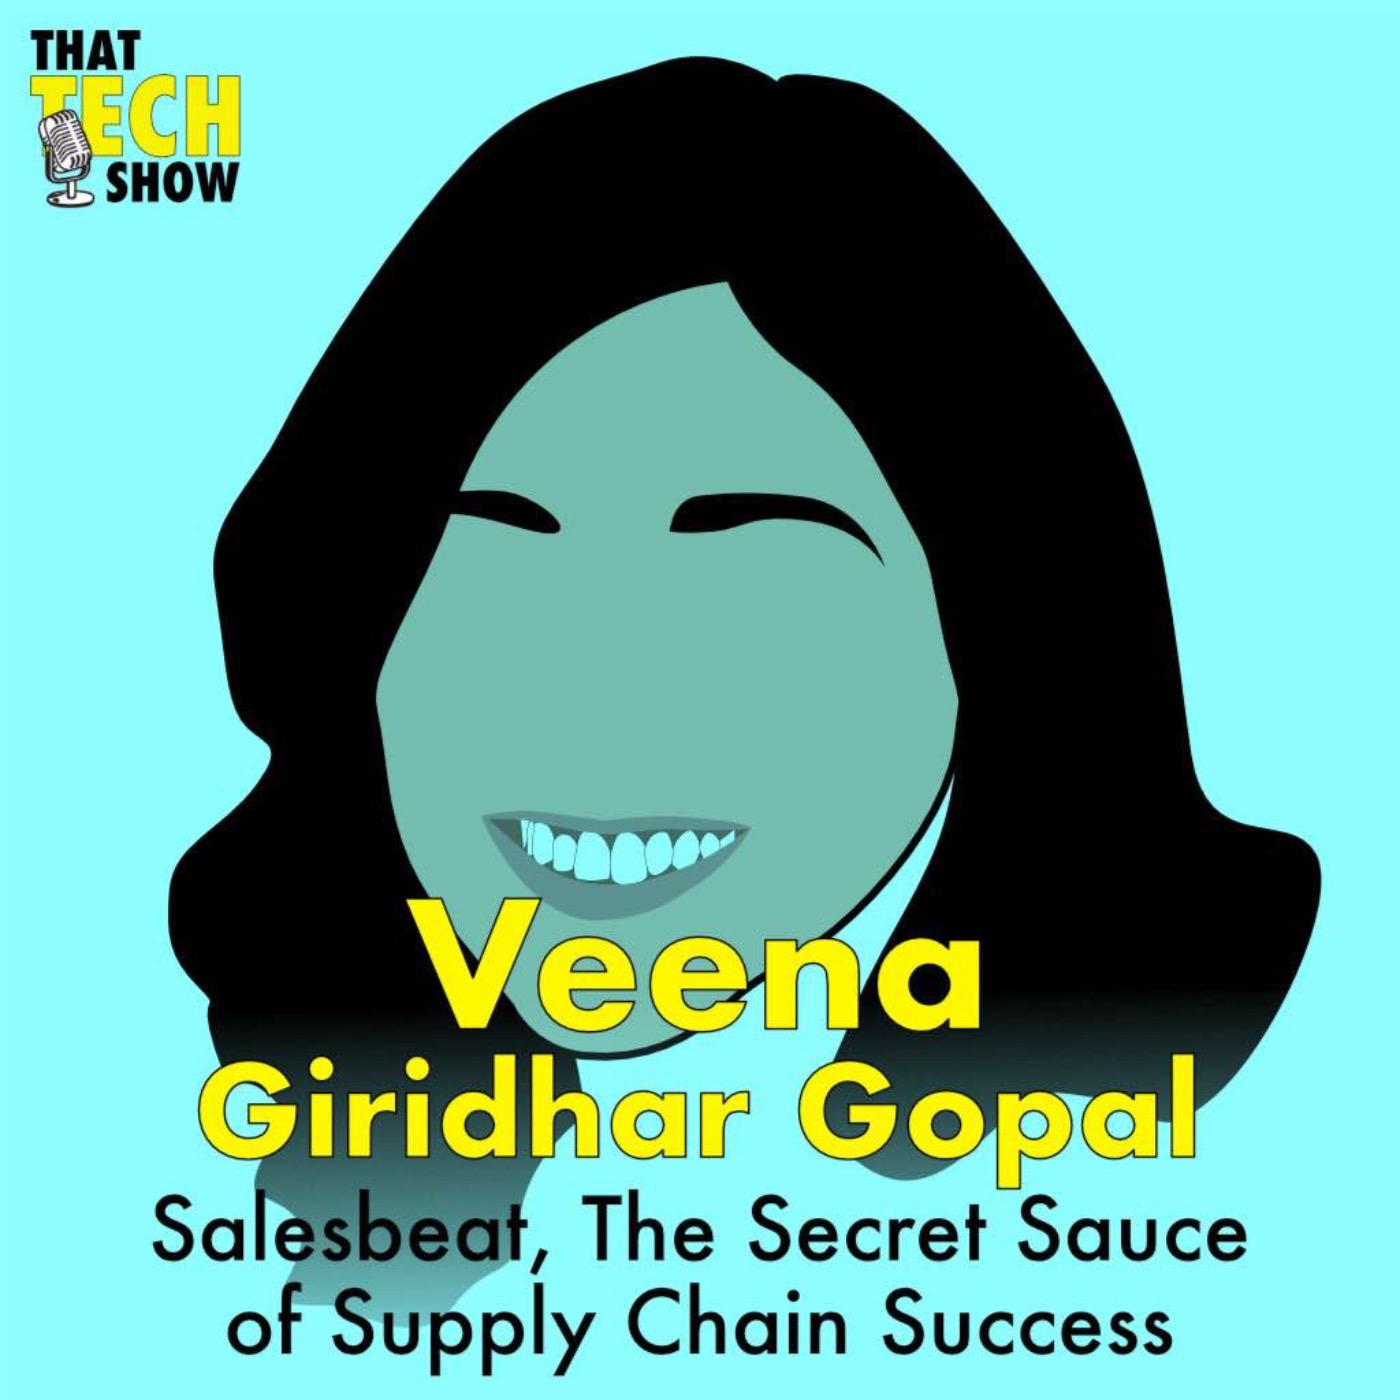 Episode 43 - Salesbeat, The Secret Sauce of Supply Chain Success with Veena Giridhar Gopal